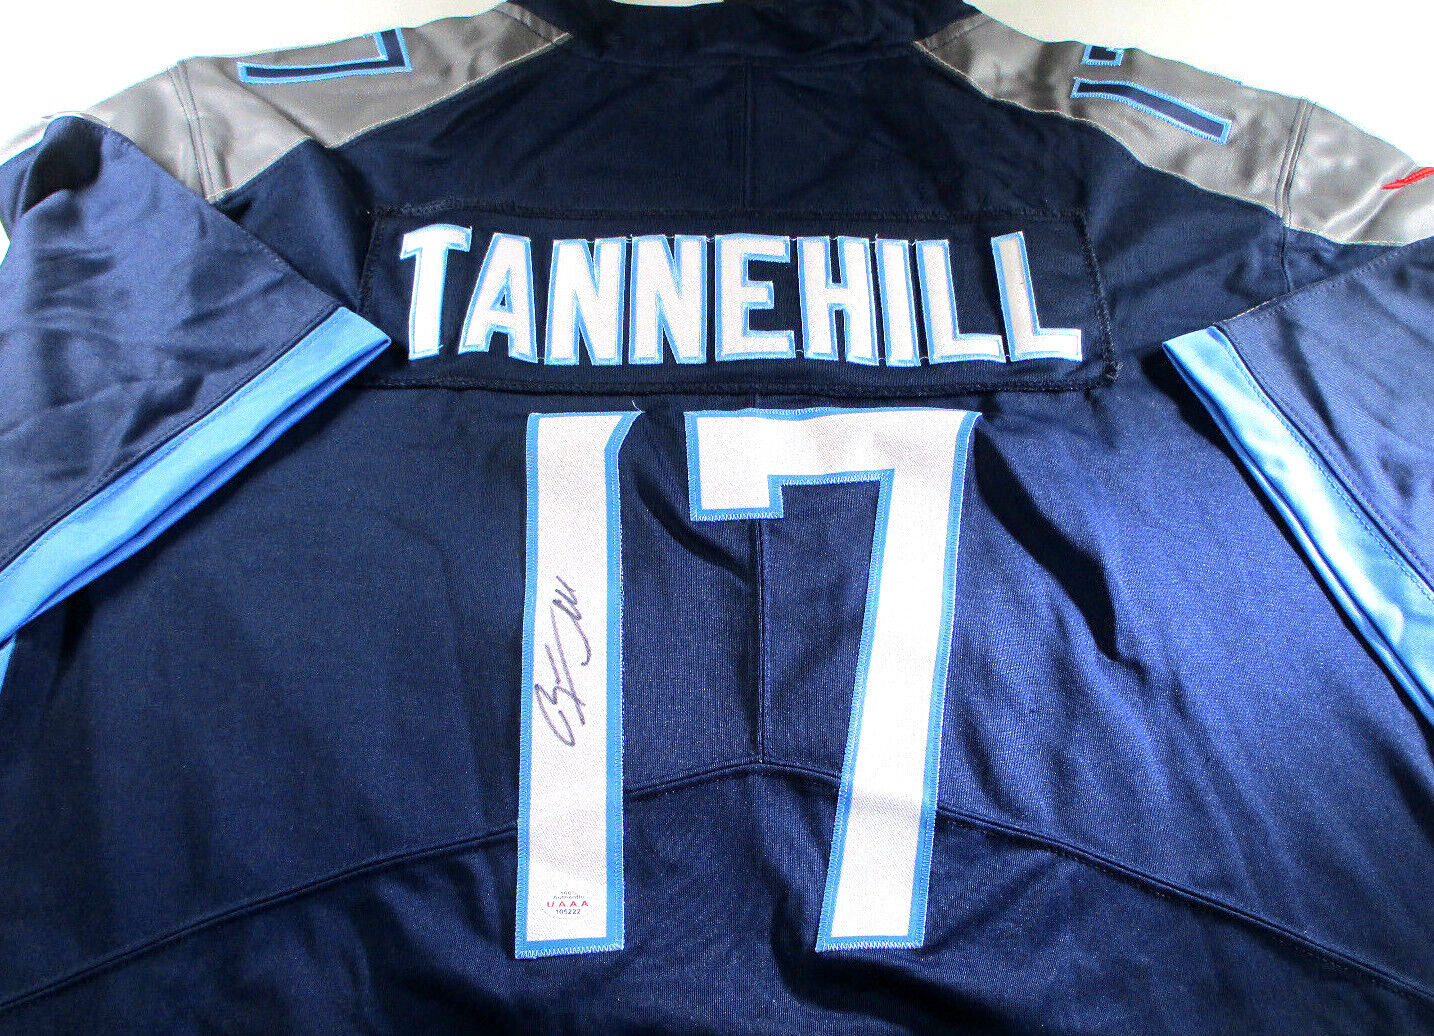 Ryan Tannehill / Autographed Tennessee Titans Pro Style Football Jersey / COA